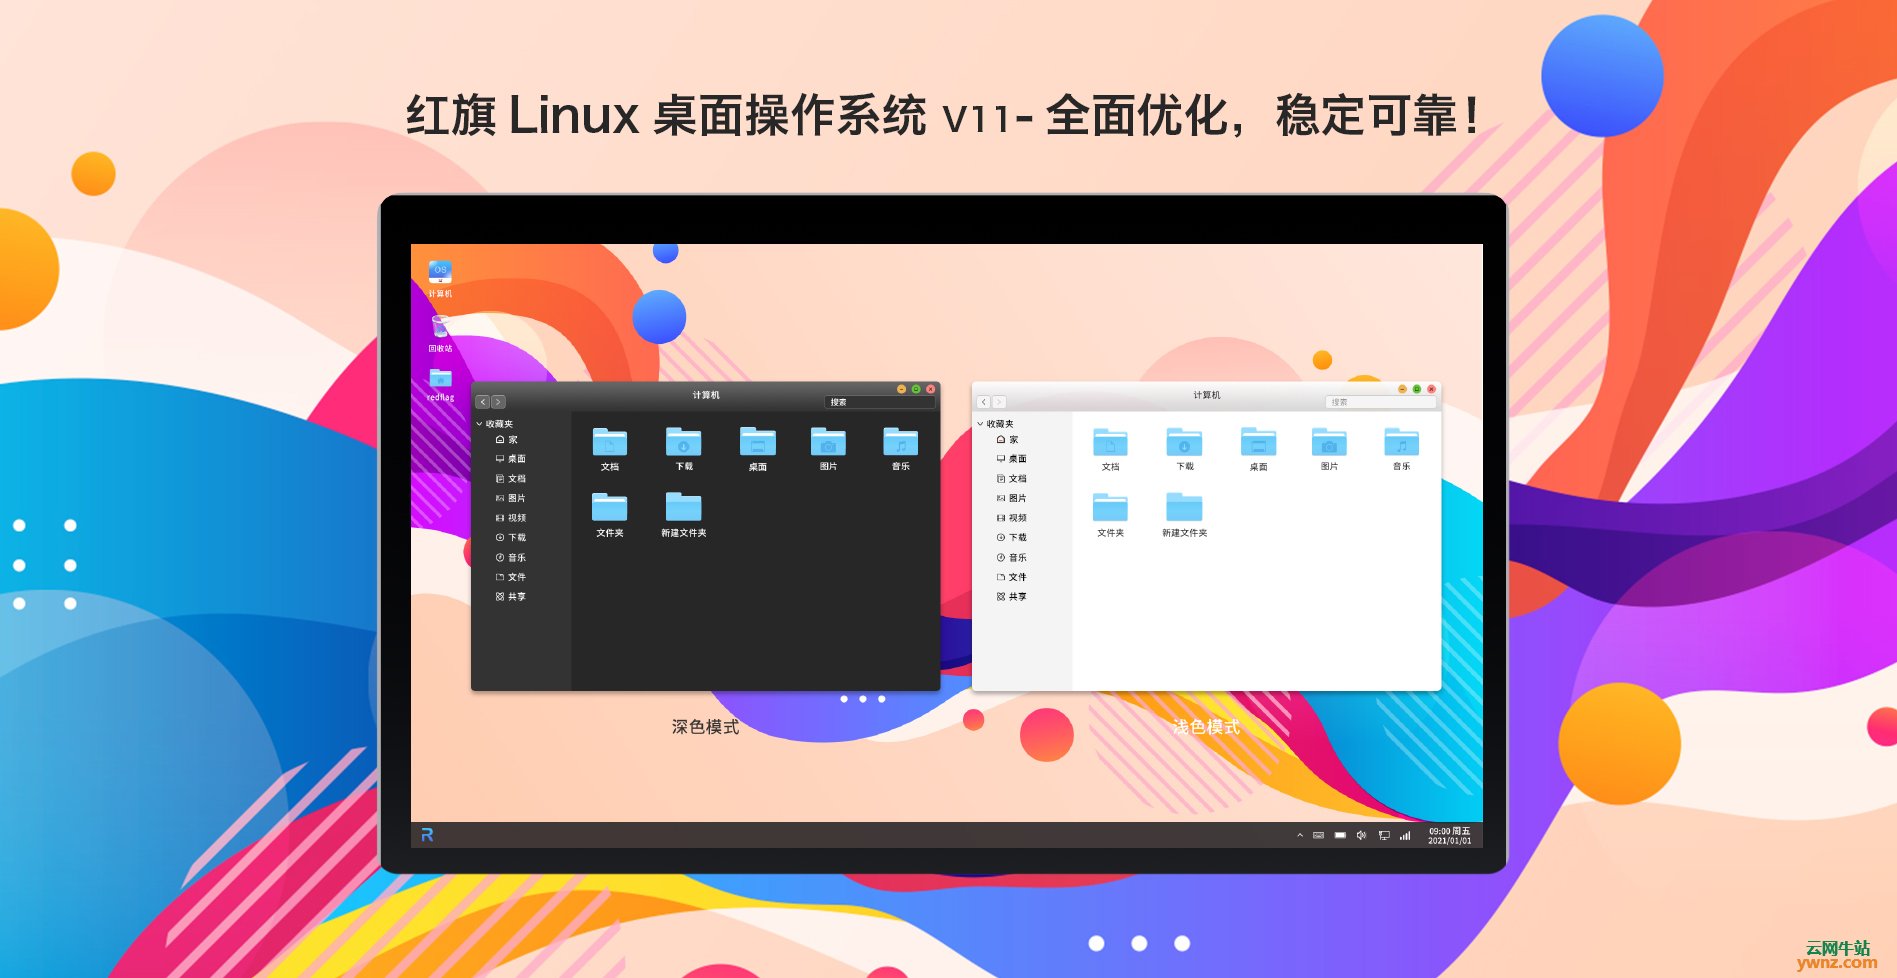 RedFlag官方公布红旗Linux V11版最早的下载体验时间